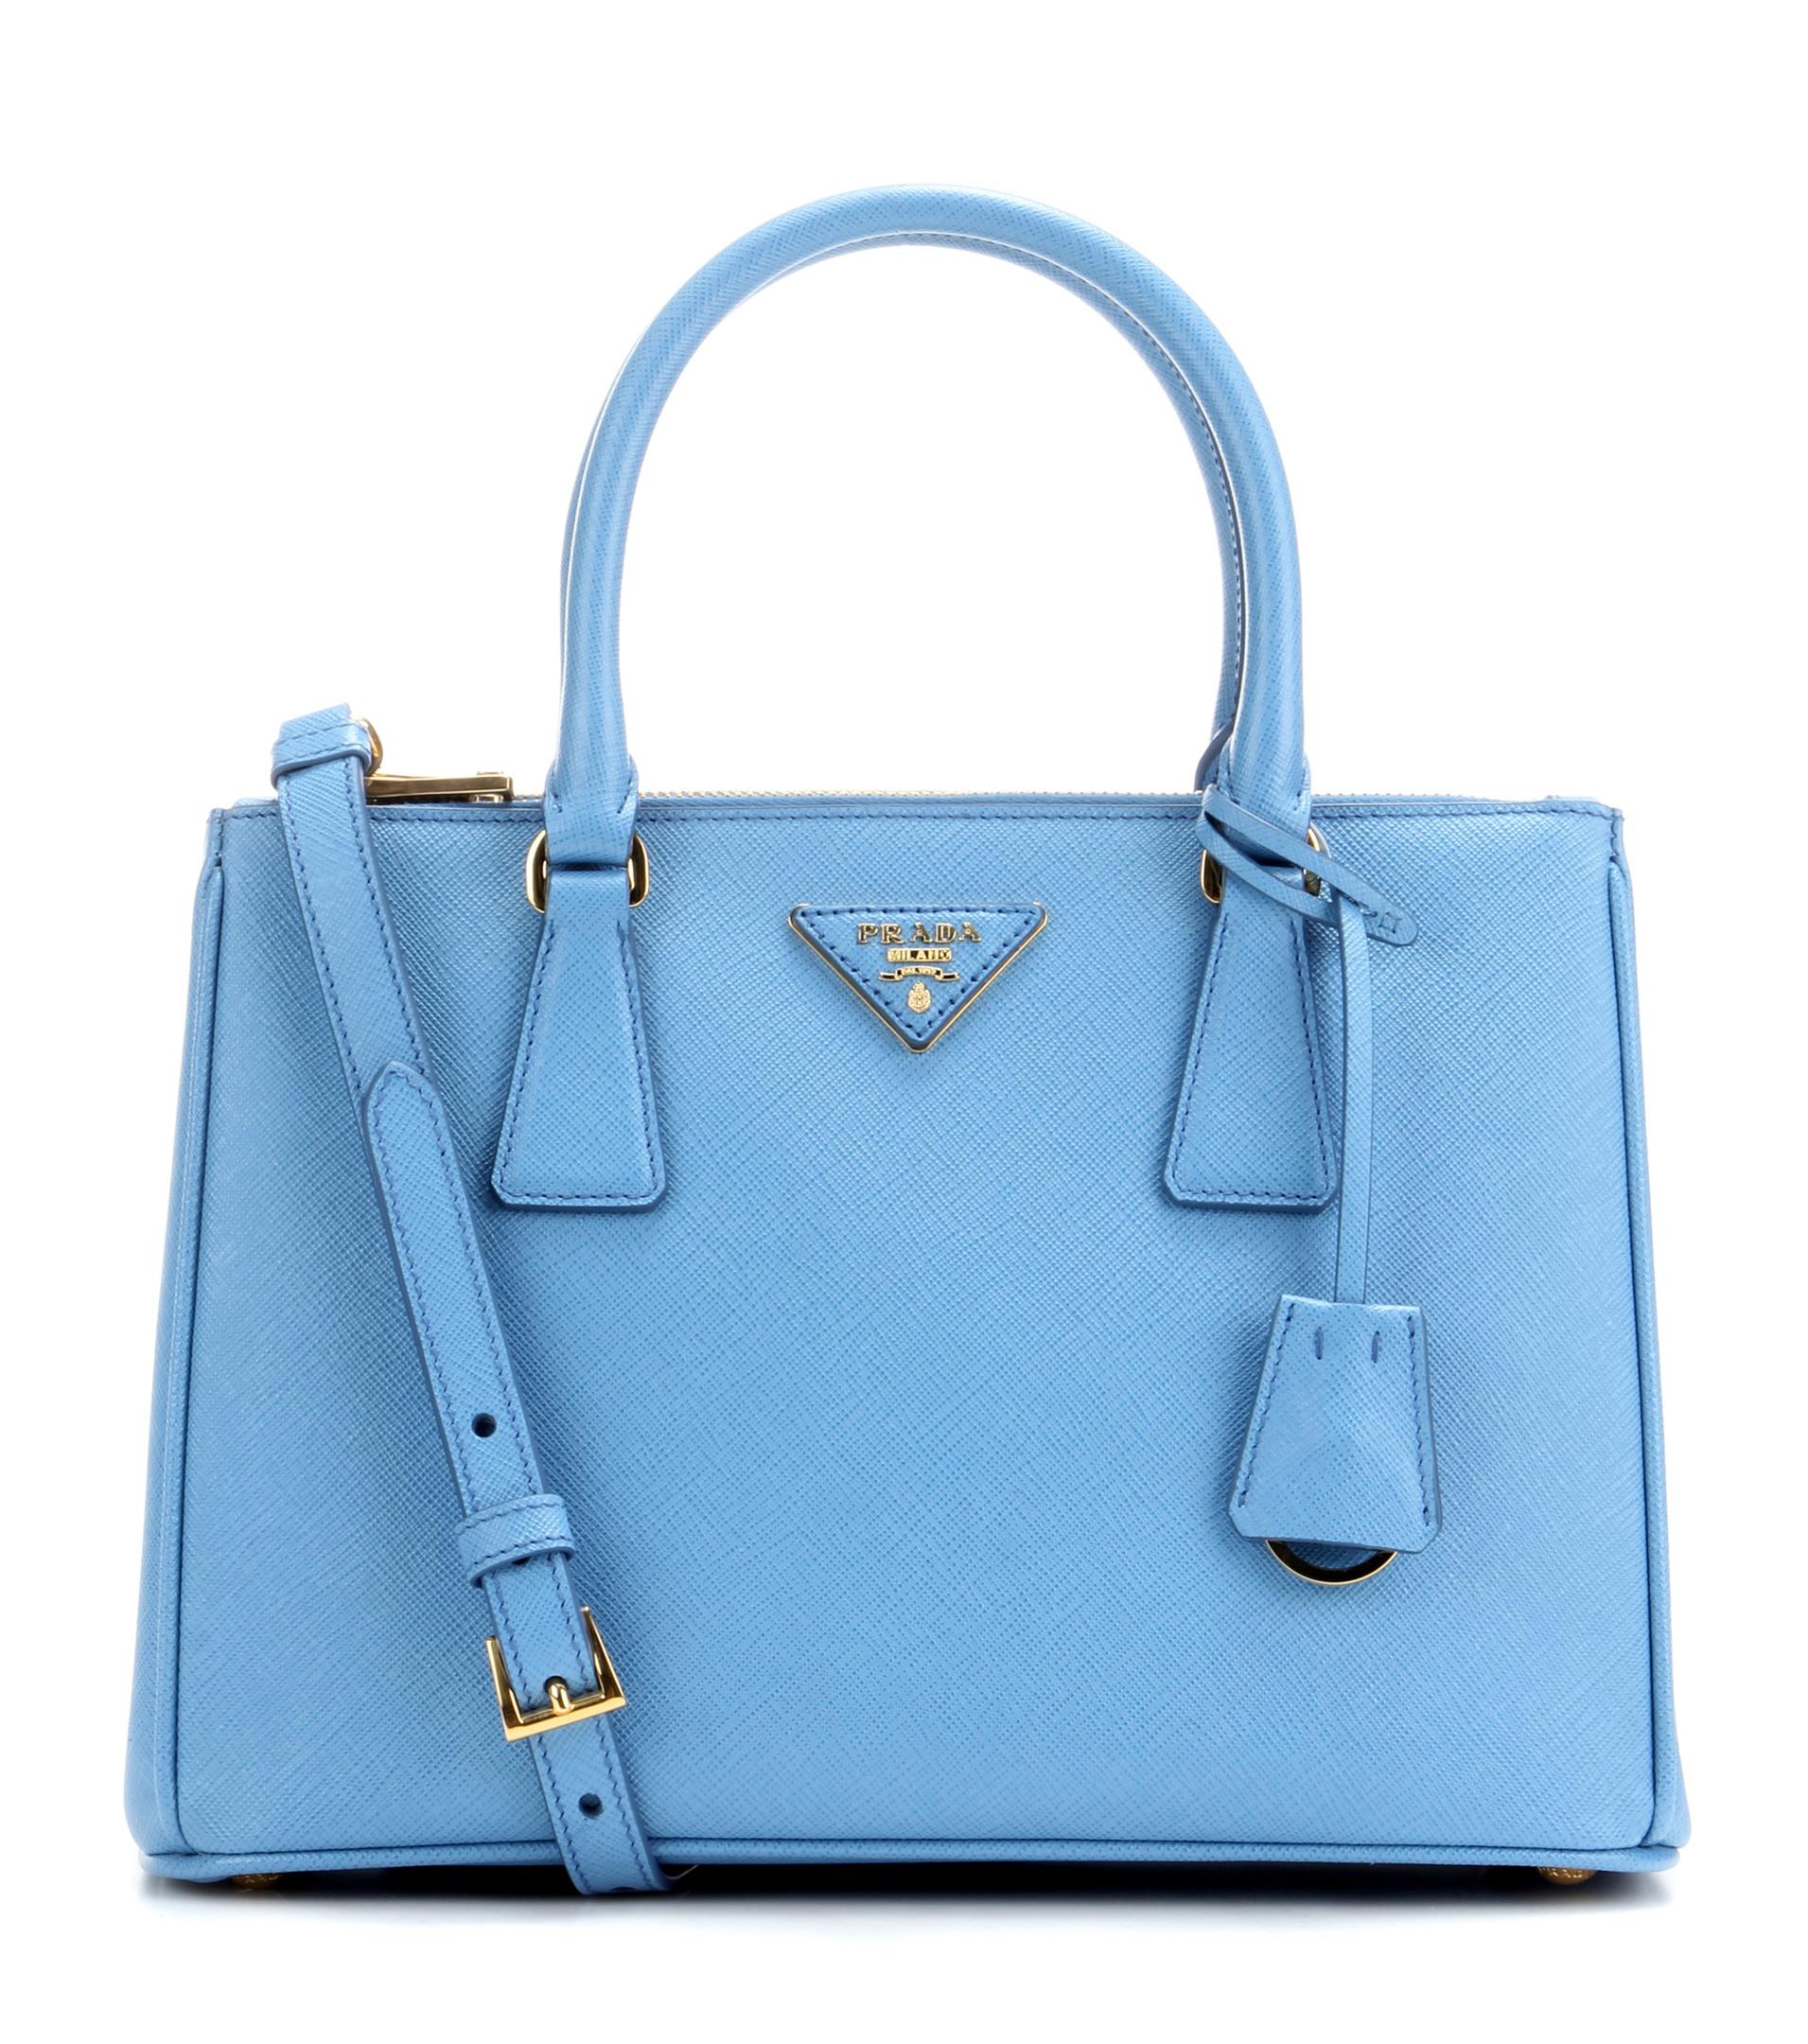 Lyst - Prada Galleria Saffiano Small Leather Shoulder Bag in Blue